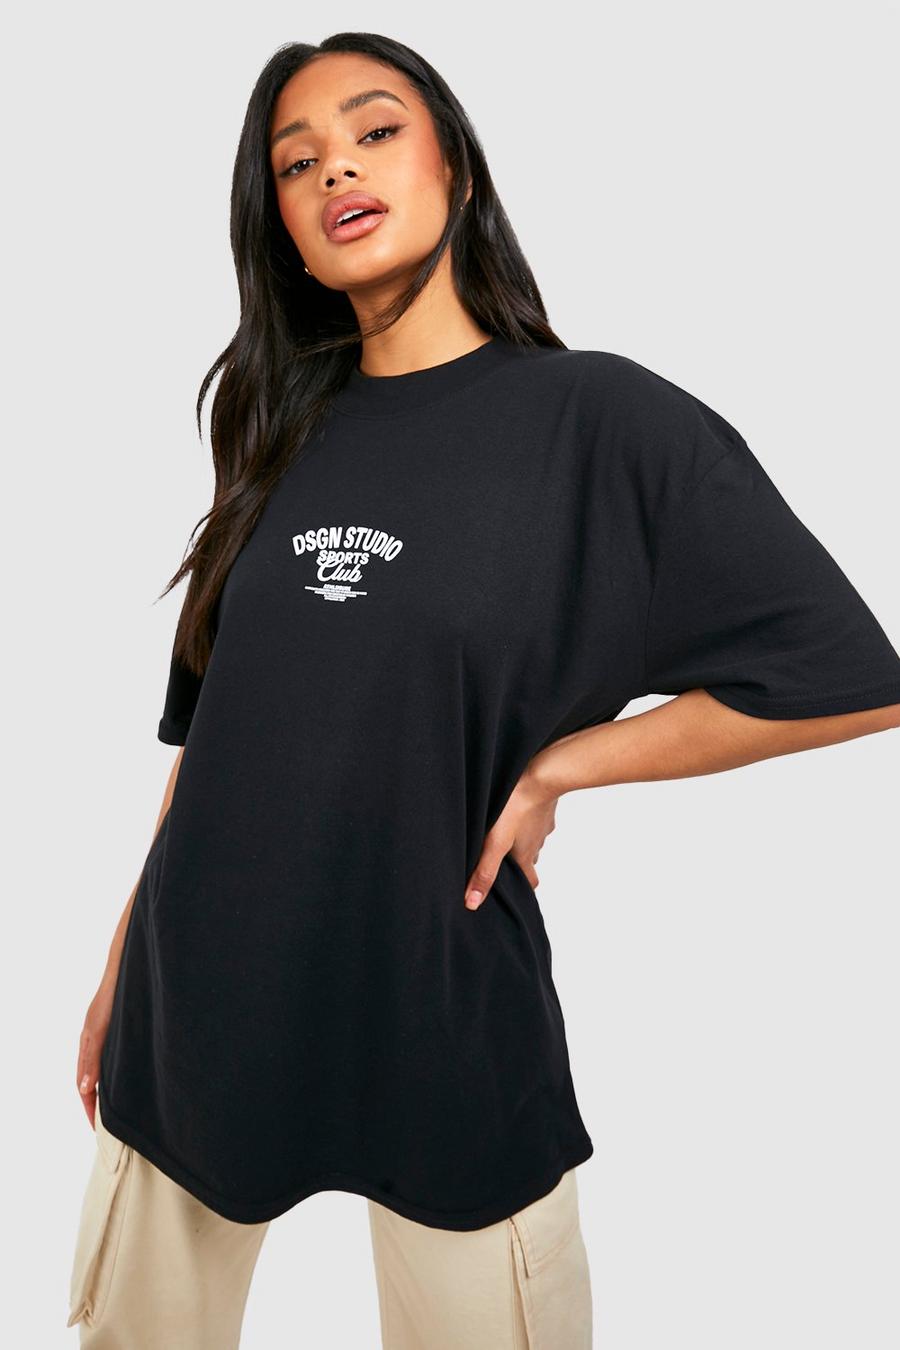 T-shirt oversize con slogan Dsgn Studio Sports Club, Black